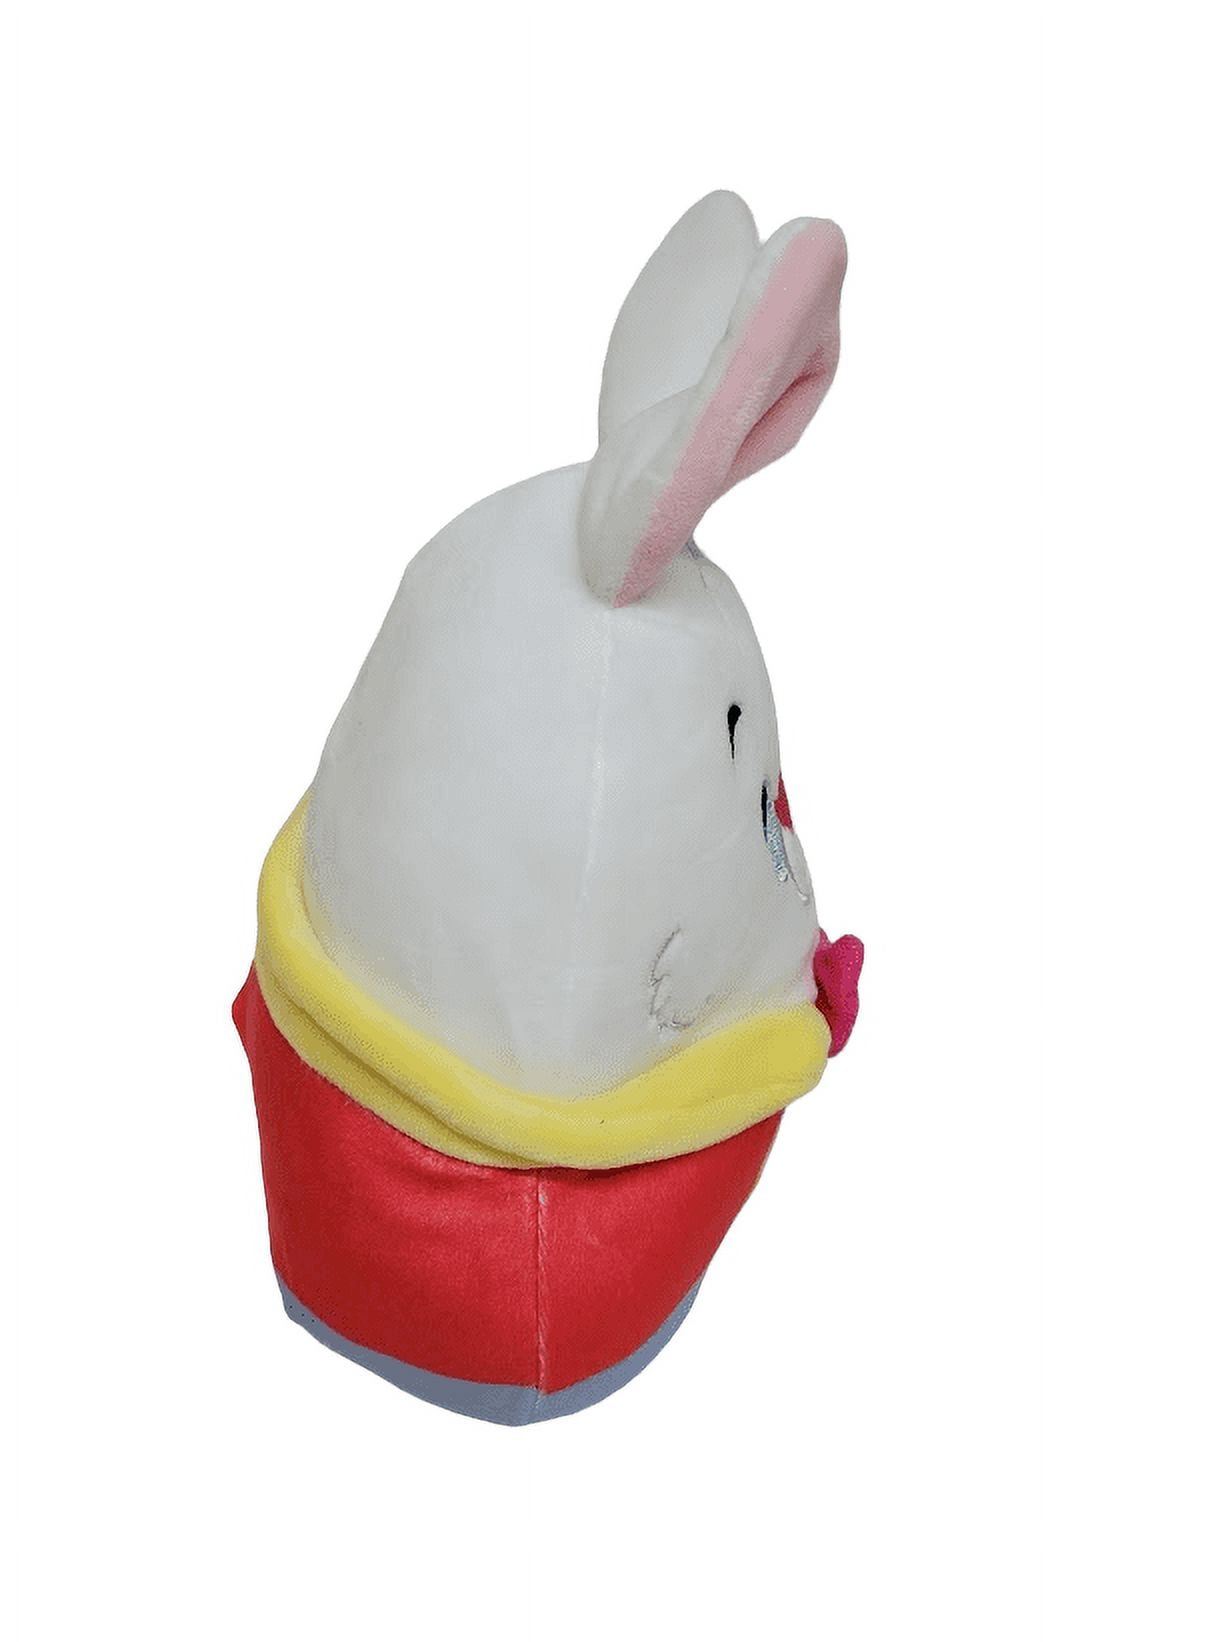 NEW Squishmallows White Rabbit 7.5 Plush - Disney's Alice in